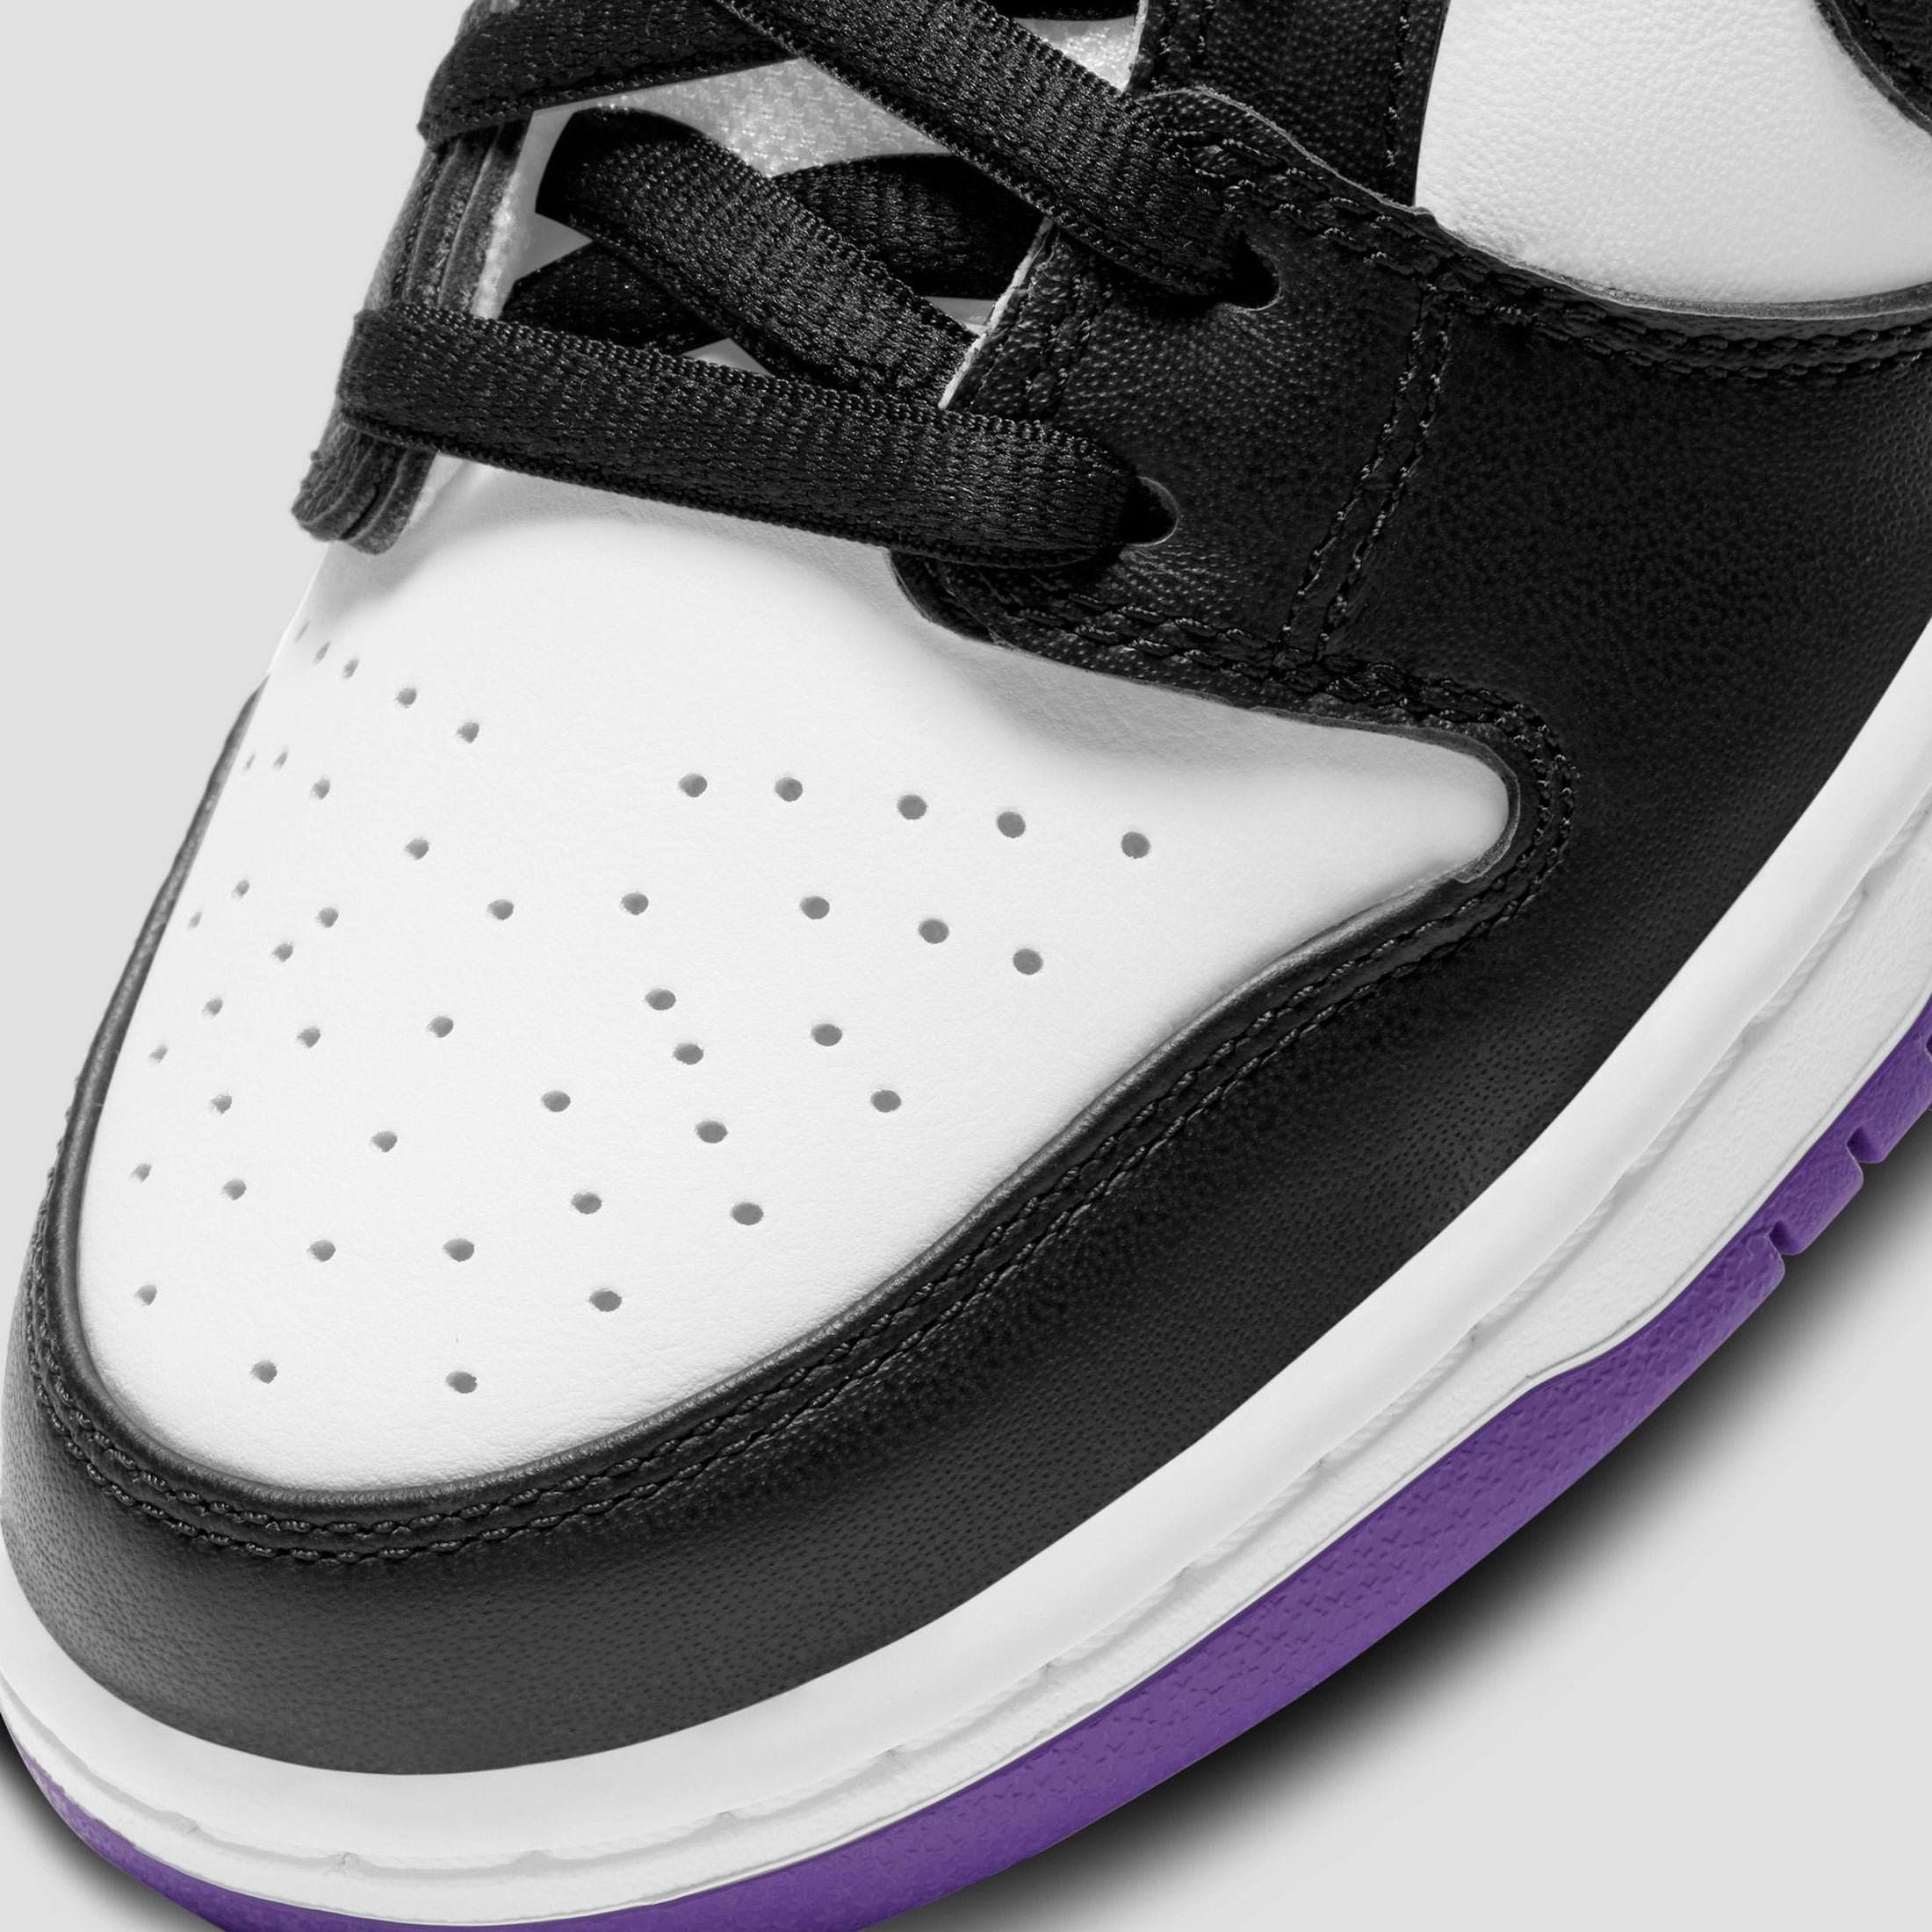 Nike SB Dunk Low Pro Shoes Court Purple / Black - White - Court Purple